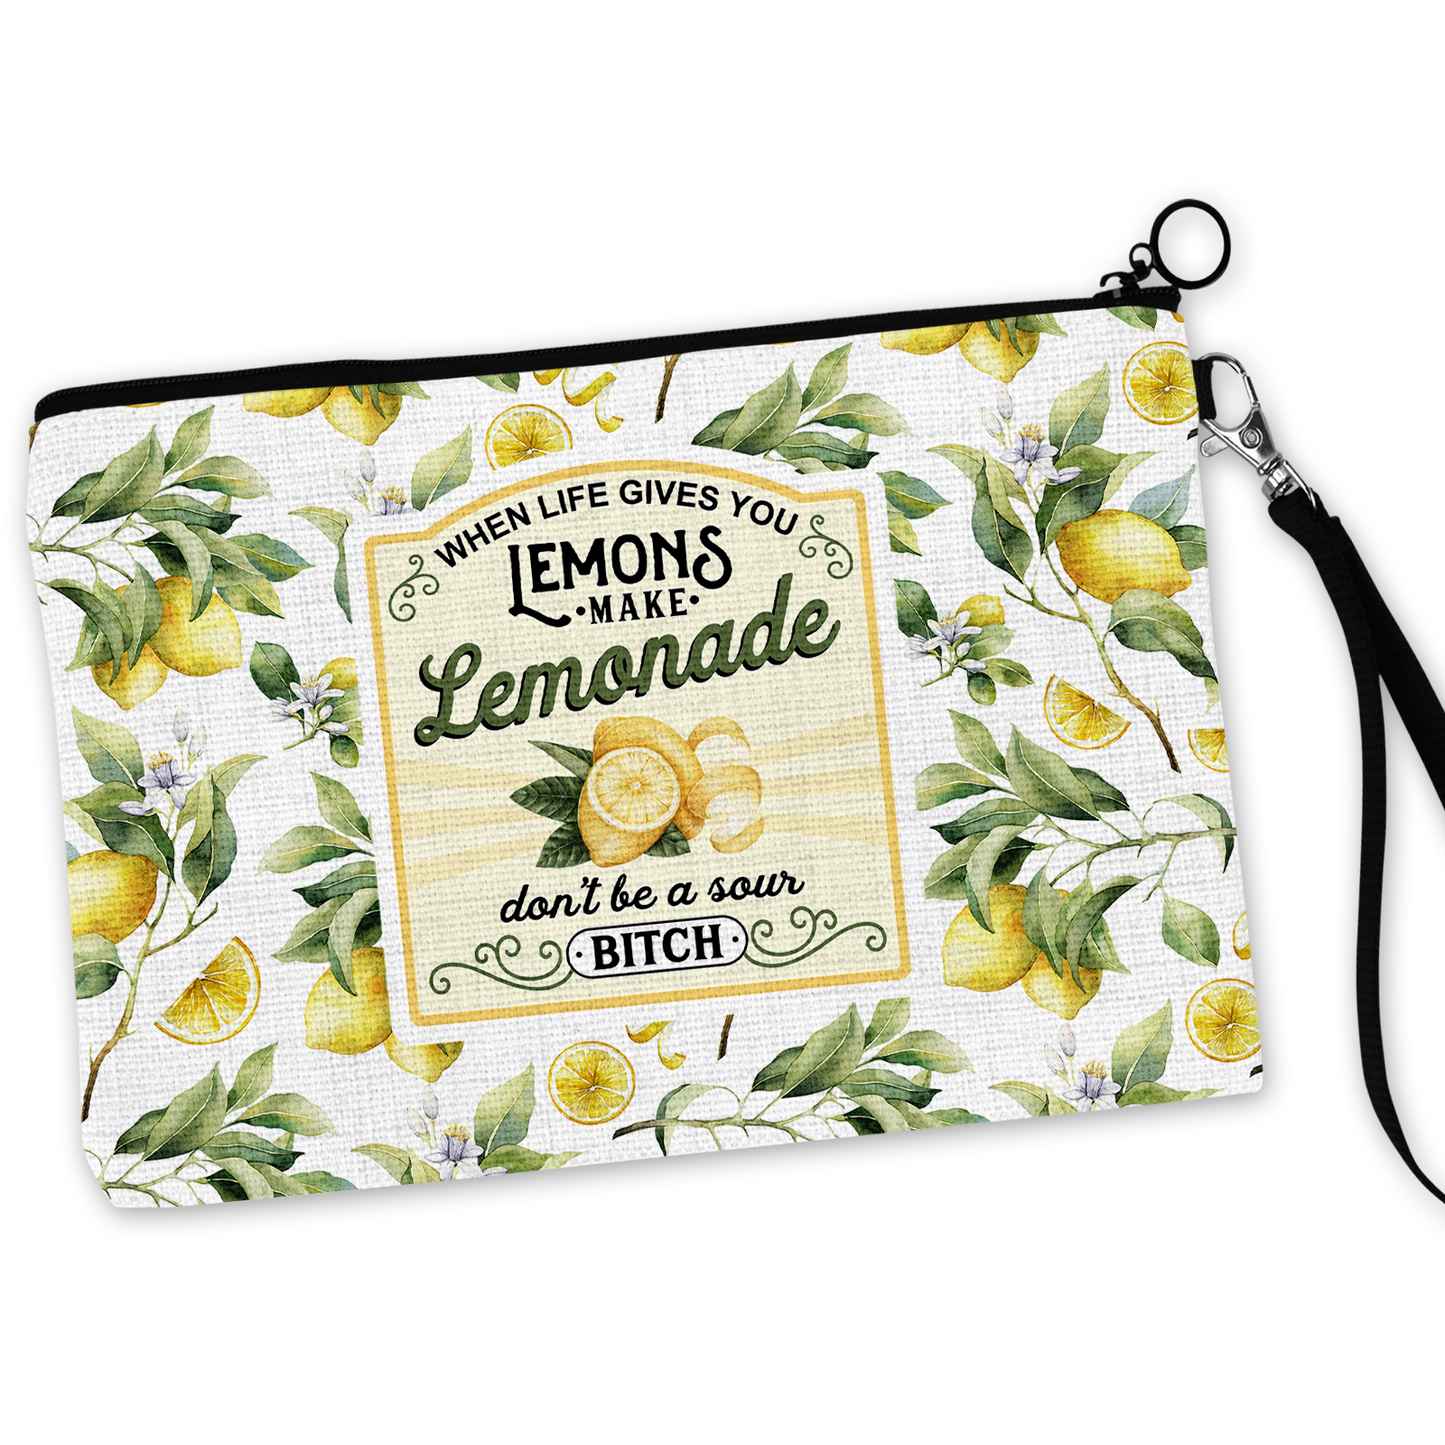 When Life Gives You Lemons Cosmetic Bag